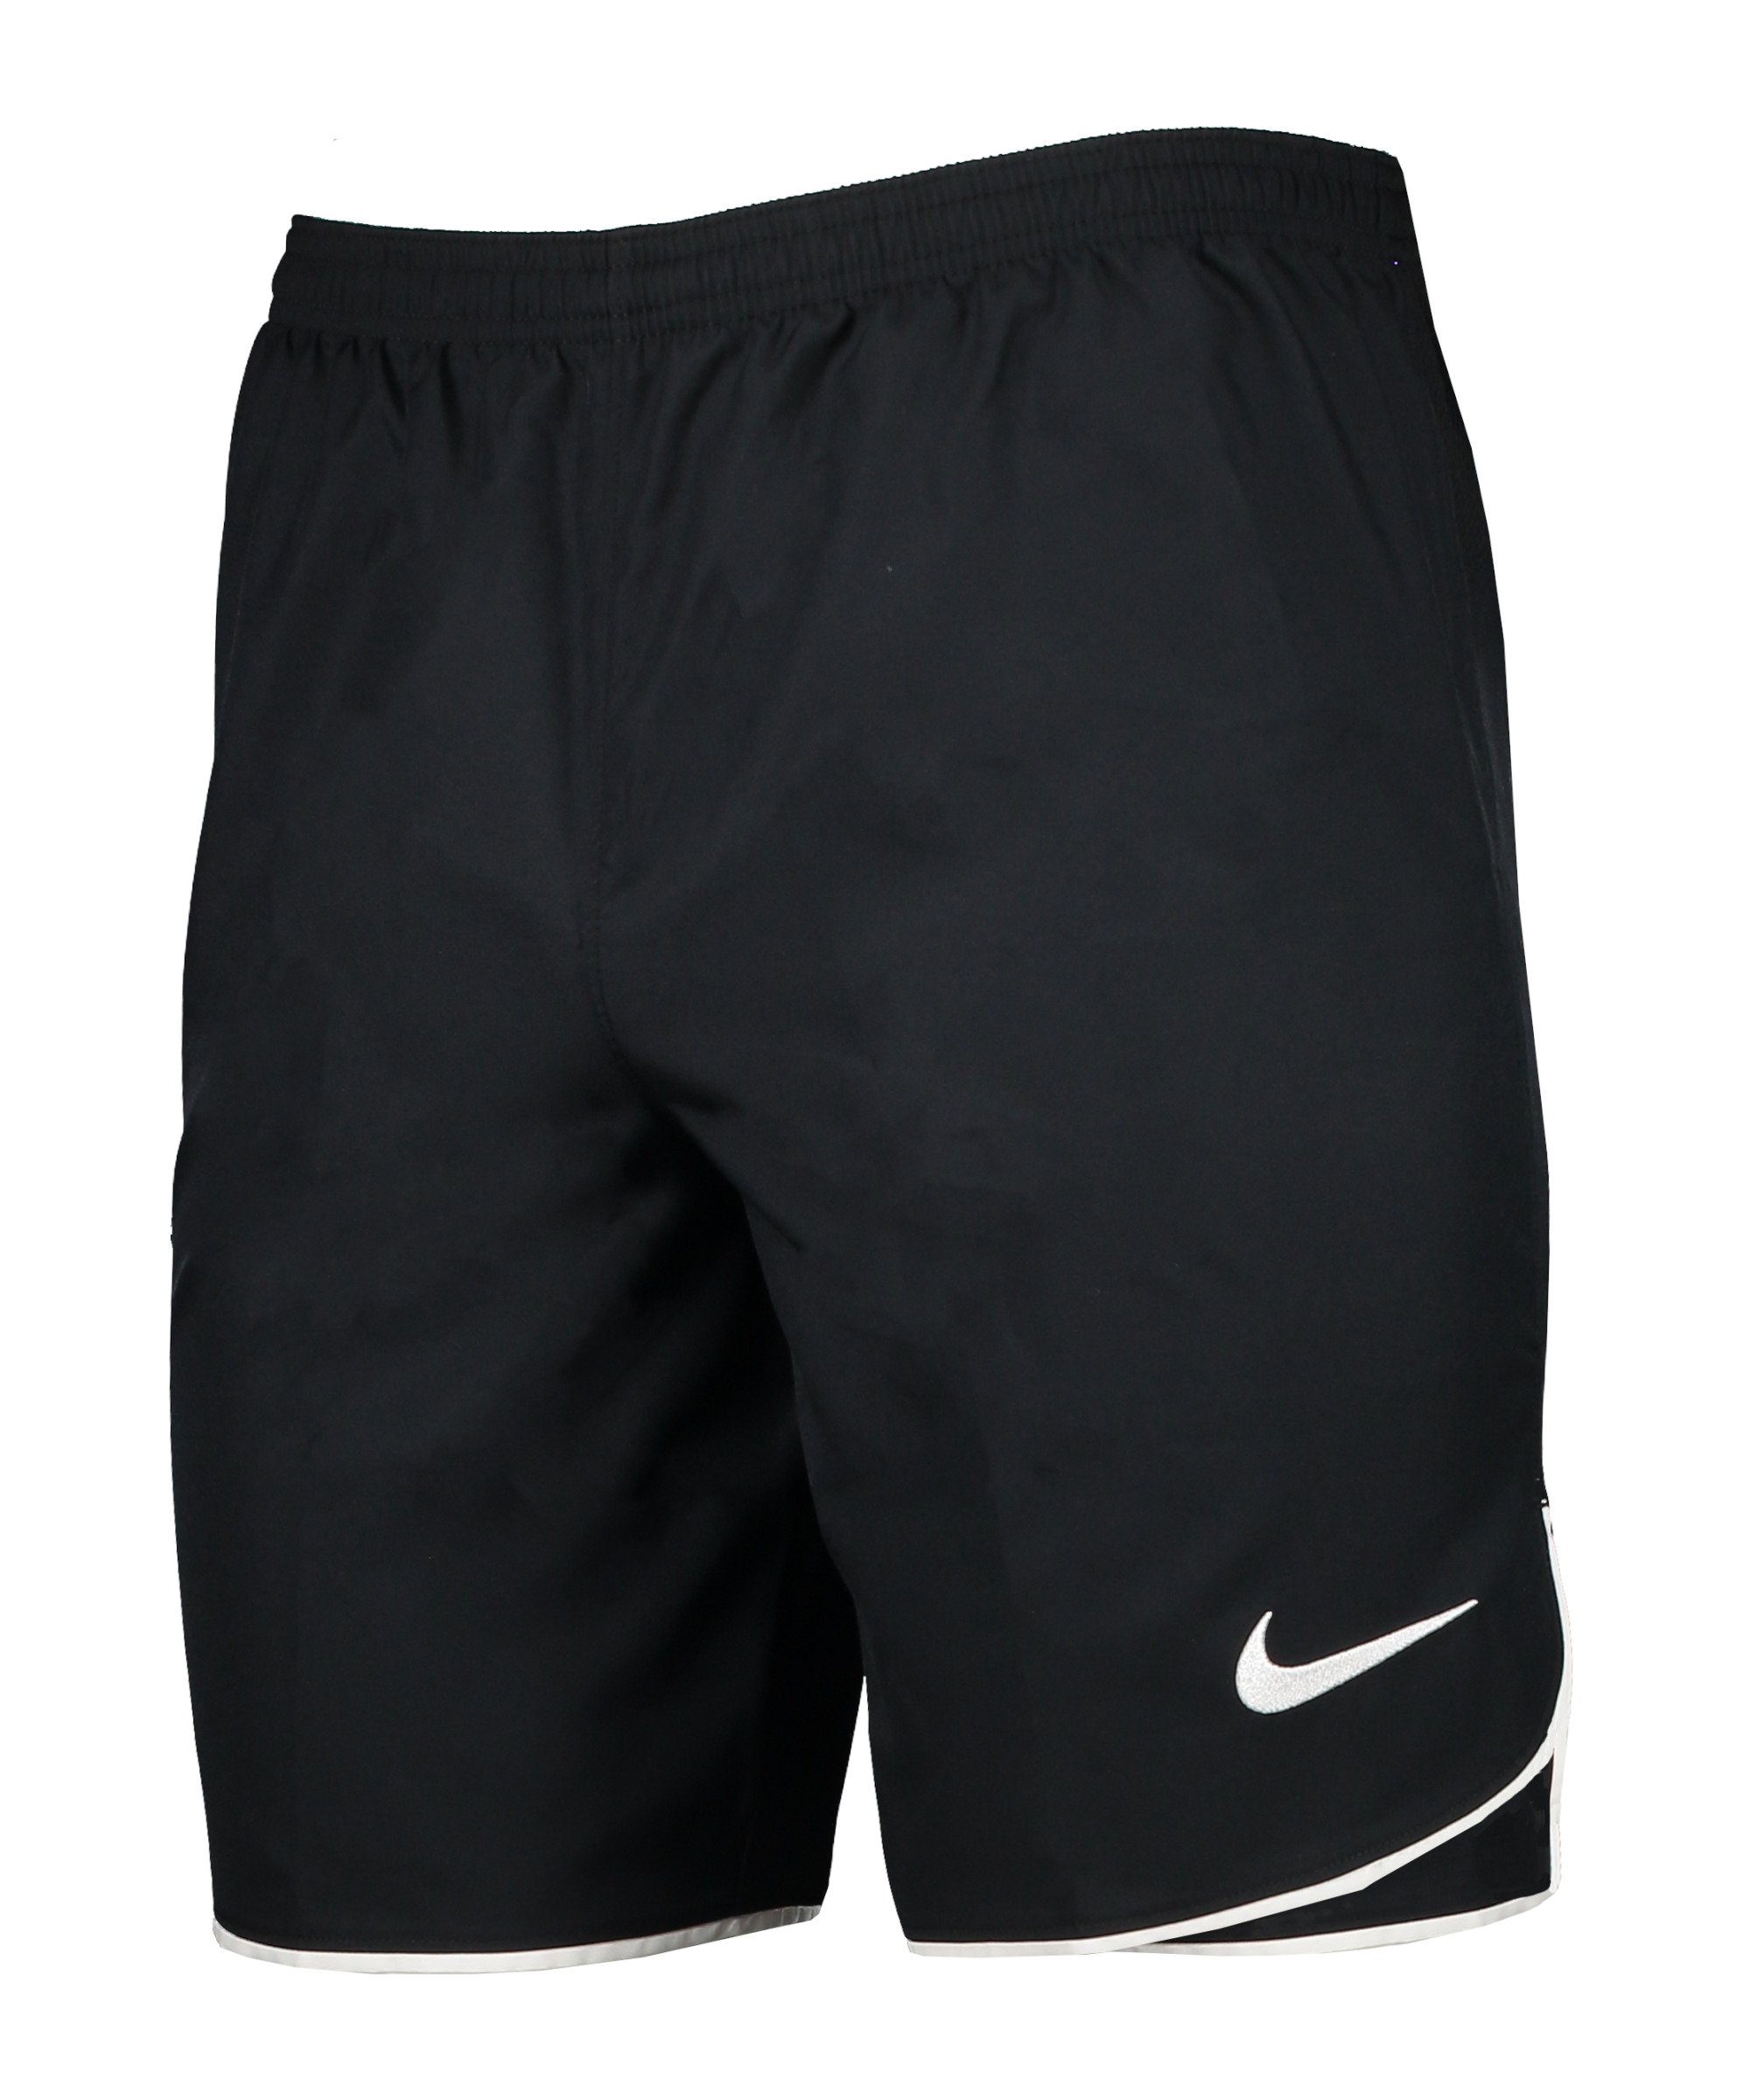 Laser Woven Nike Sporthose Short V schwarzweiss Kids